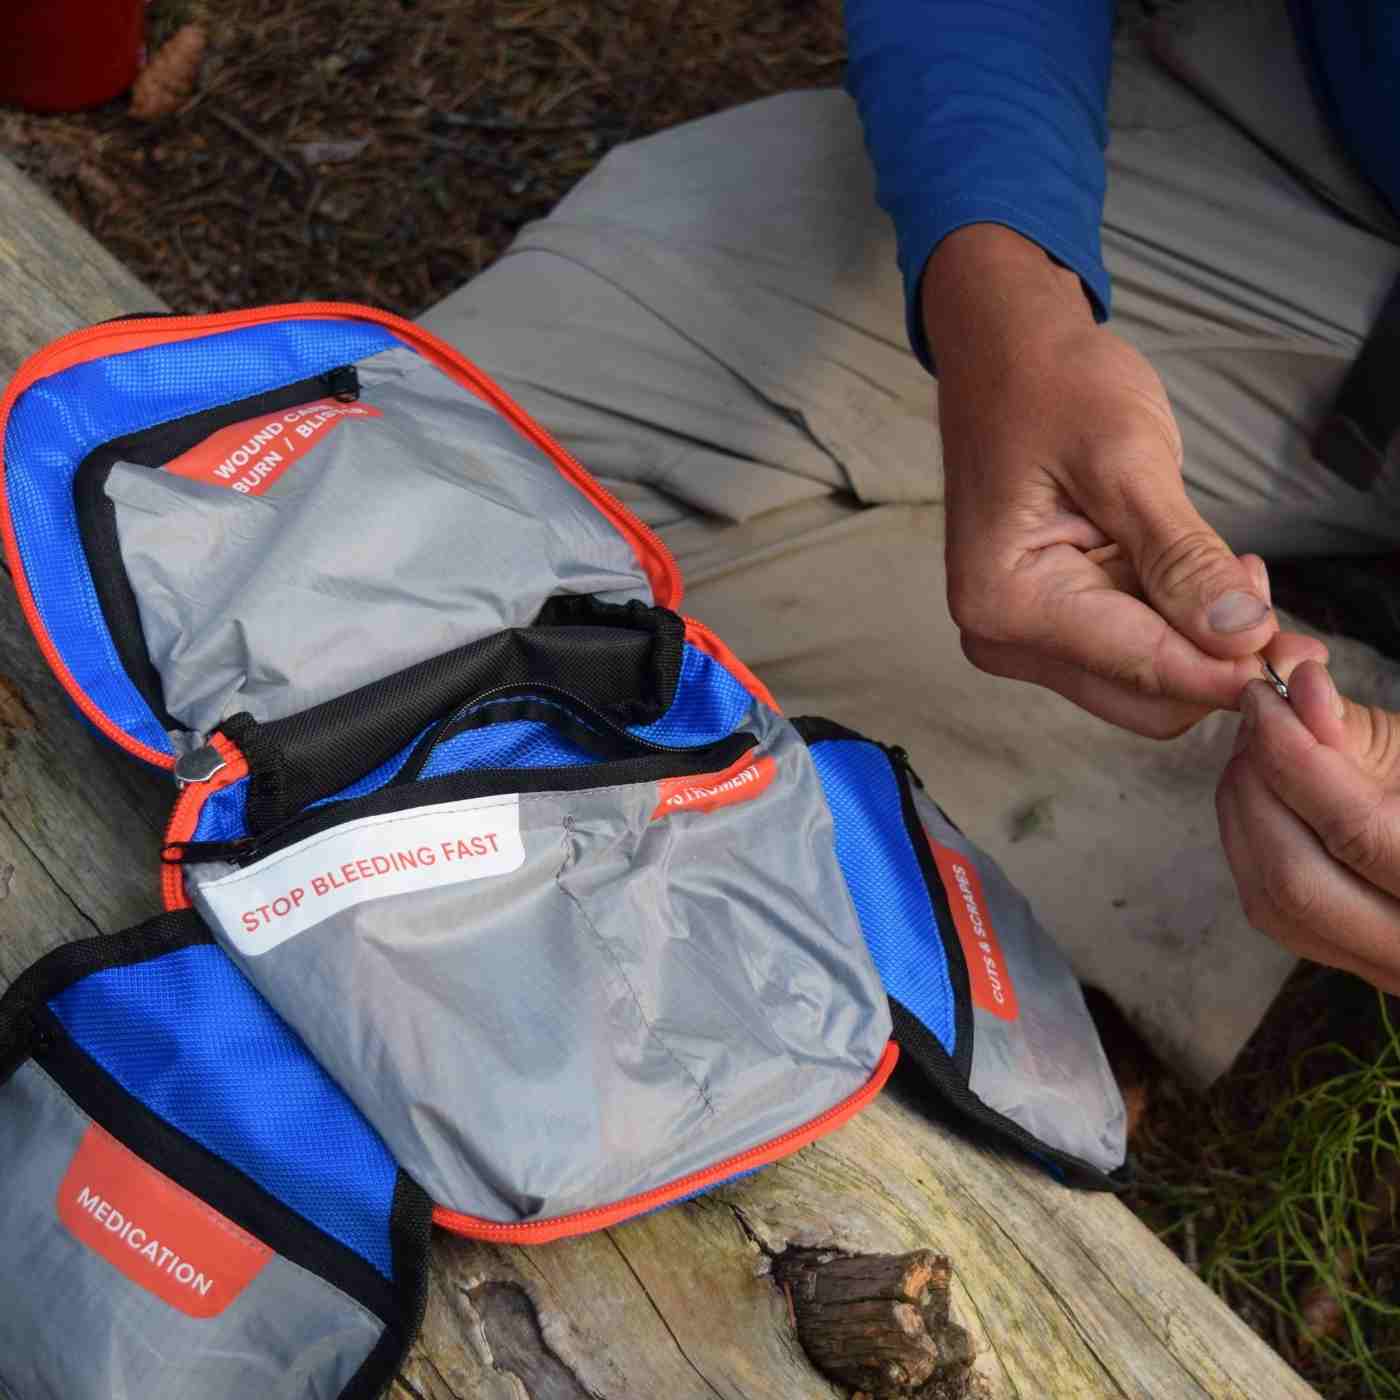 Mountain Series Medical Kit - Backpacker kit opened with man using tweezers on log